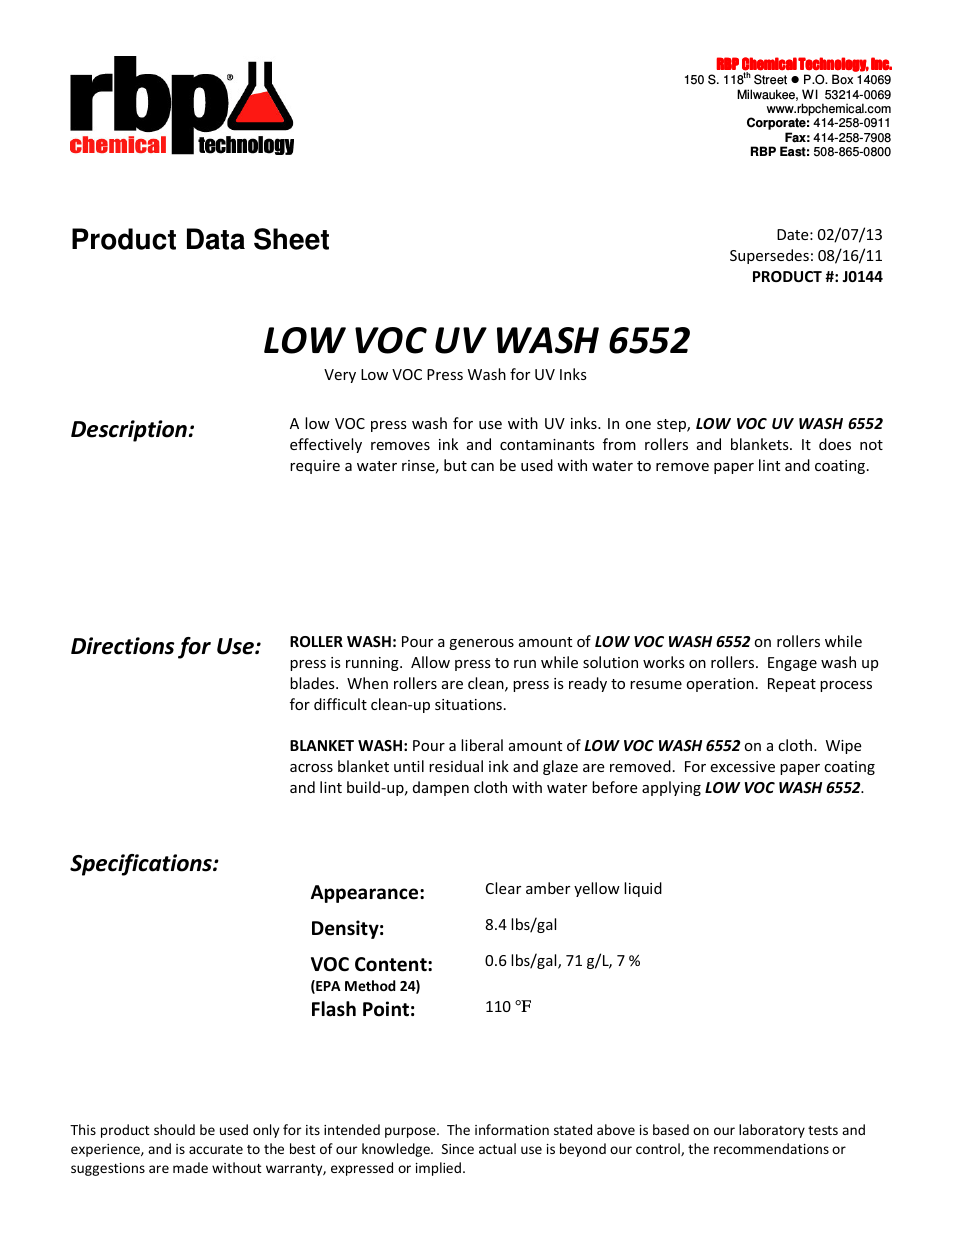 J0144 LOW VOC UV WASH 6552